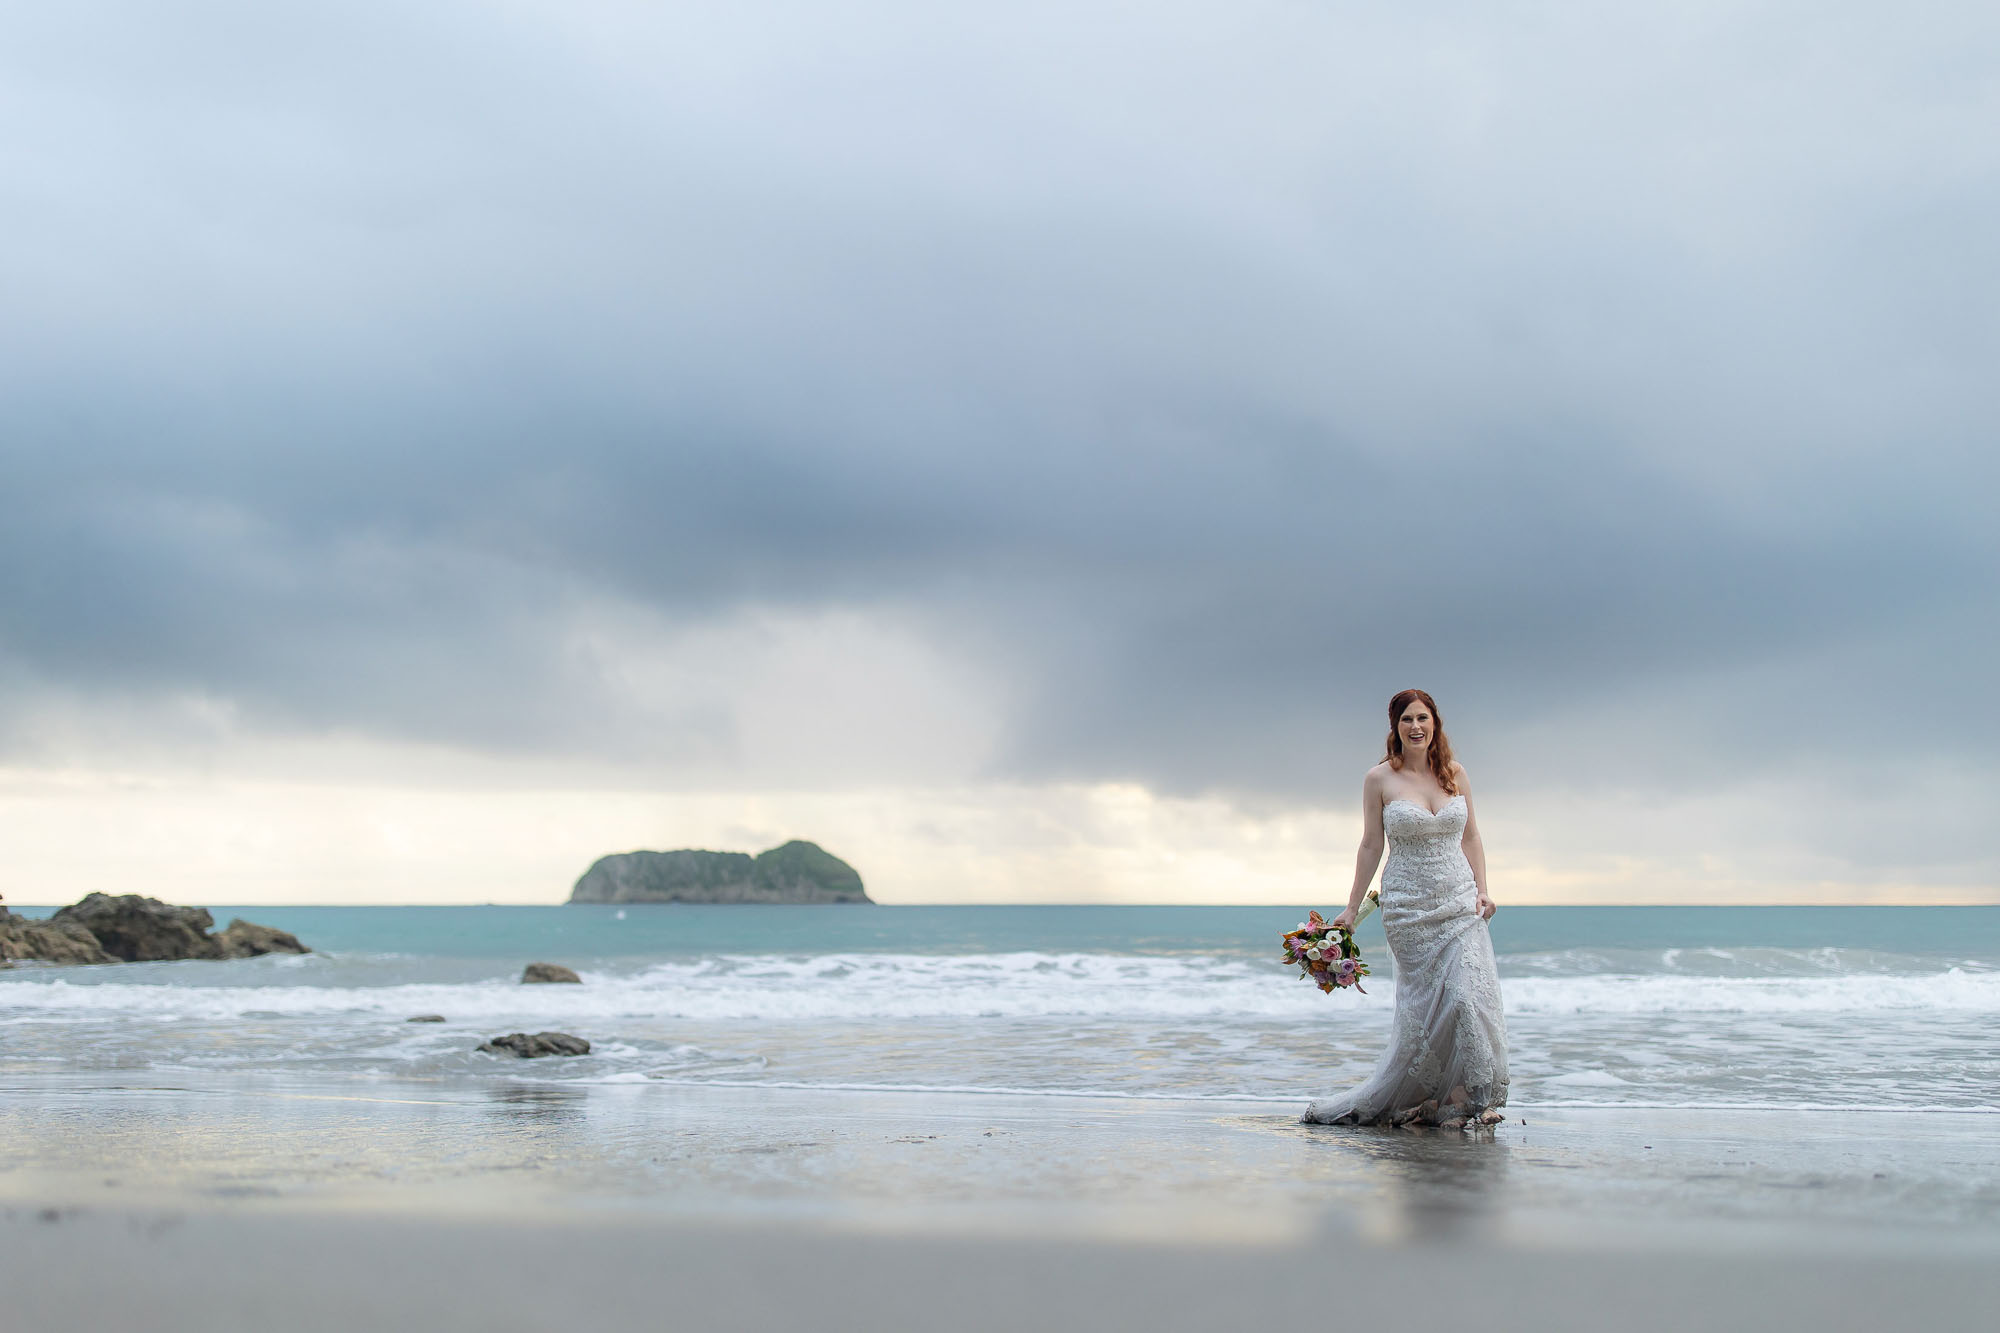 The bride on the beach